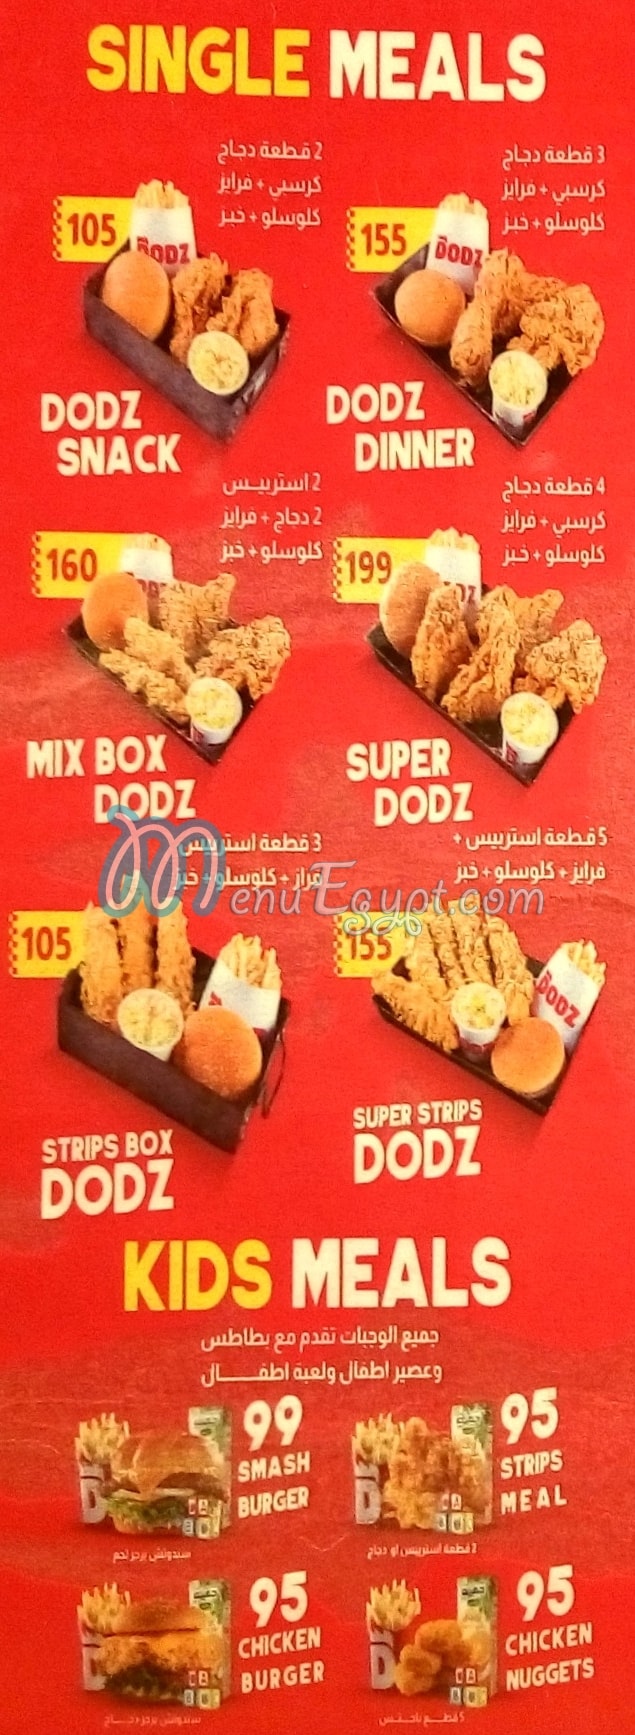 dodz menu Egypt